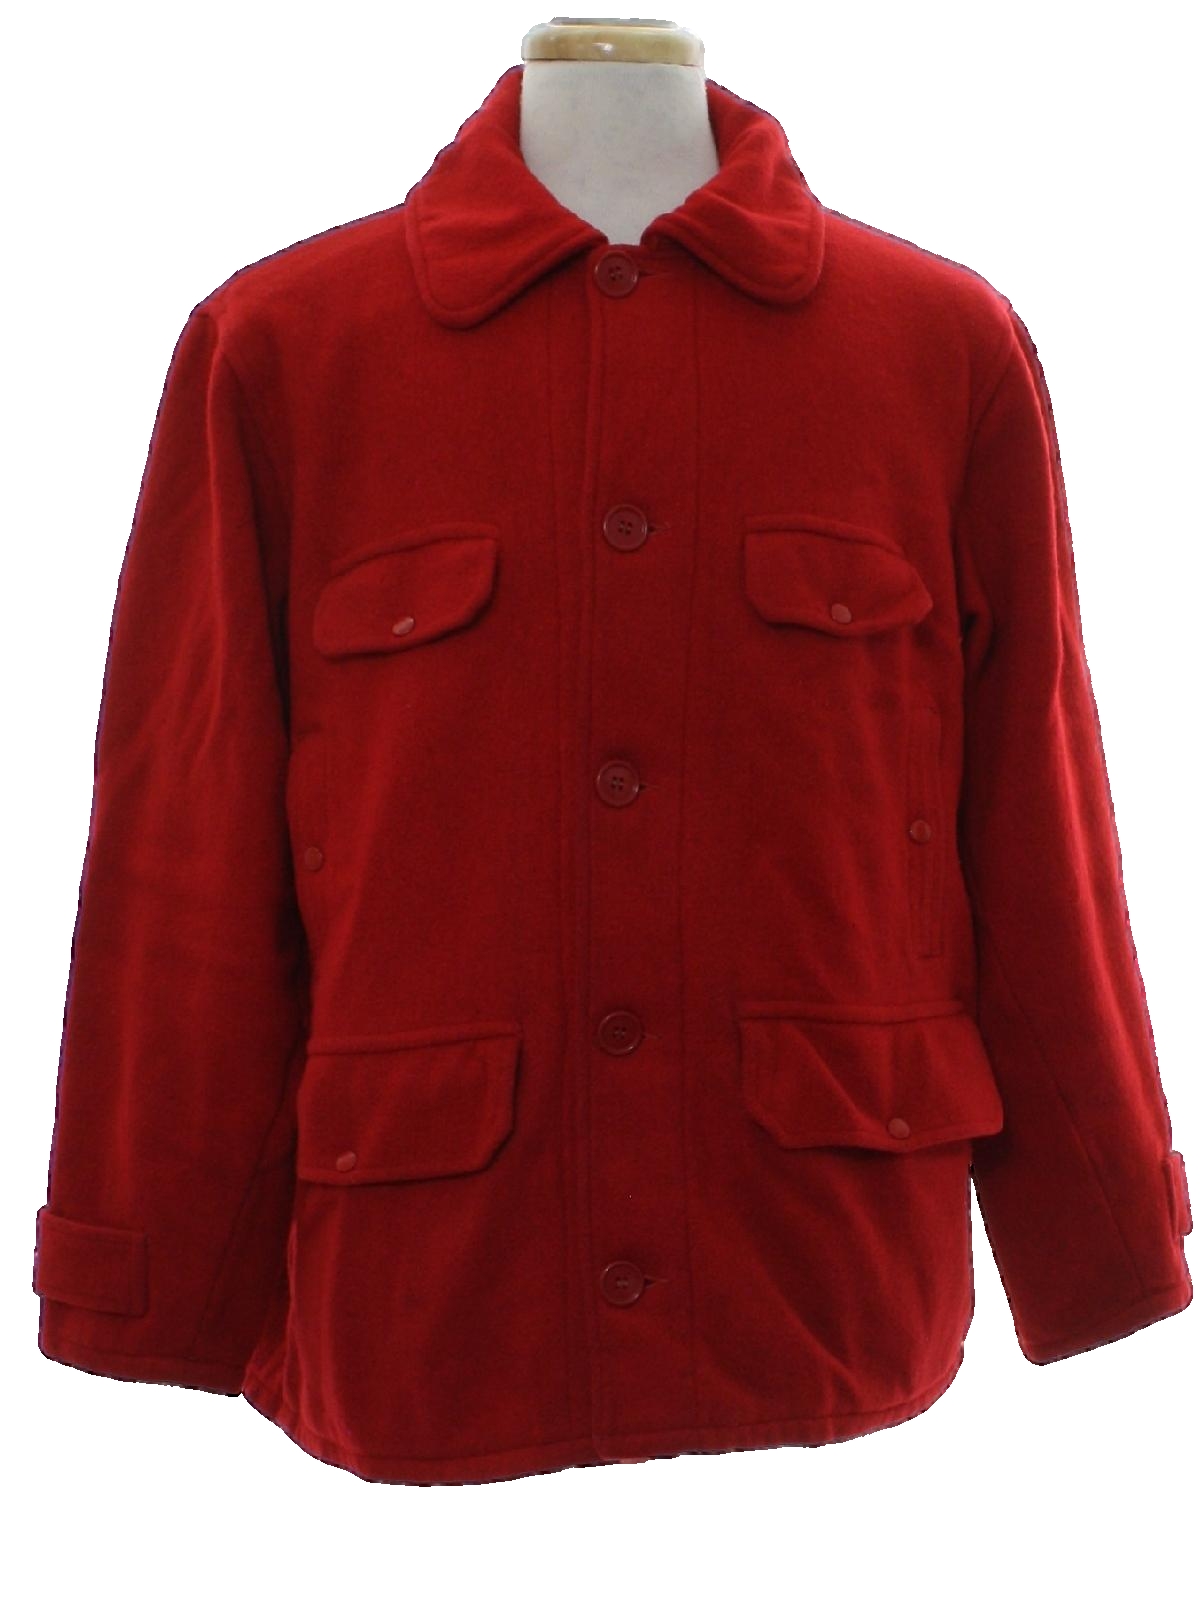 Retro 60s Jacket (Johnson) : 60s -Johnson- Mens red background wool ...